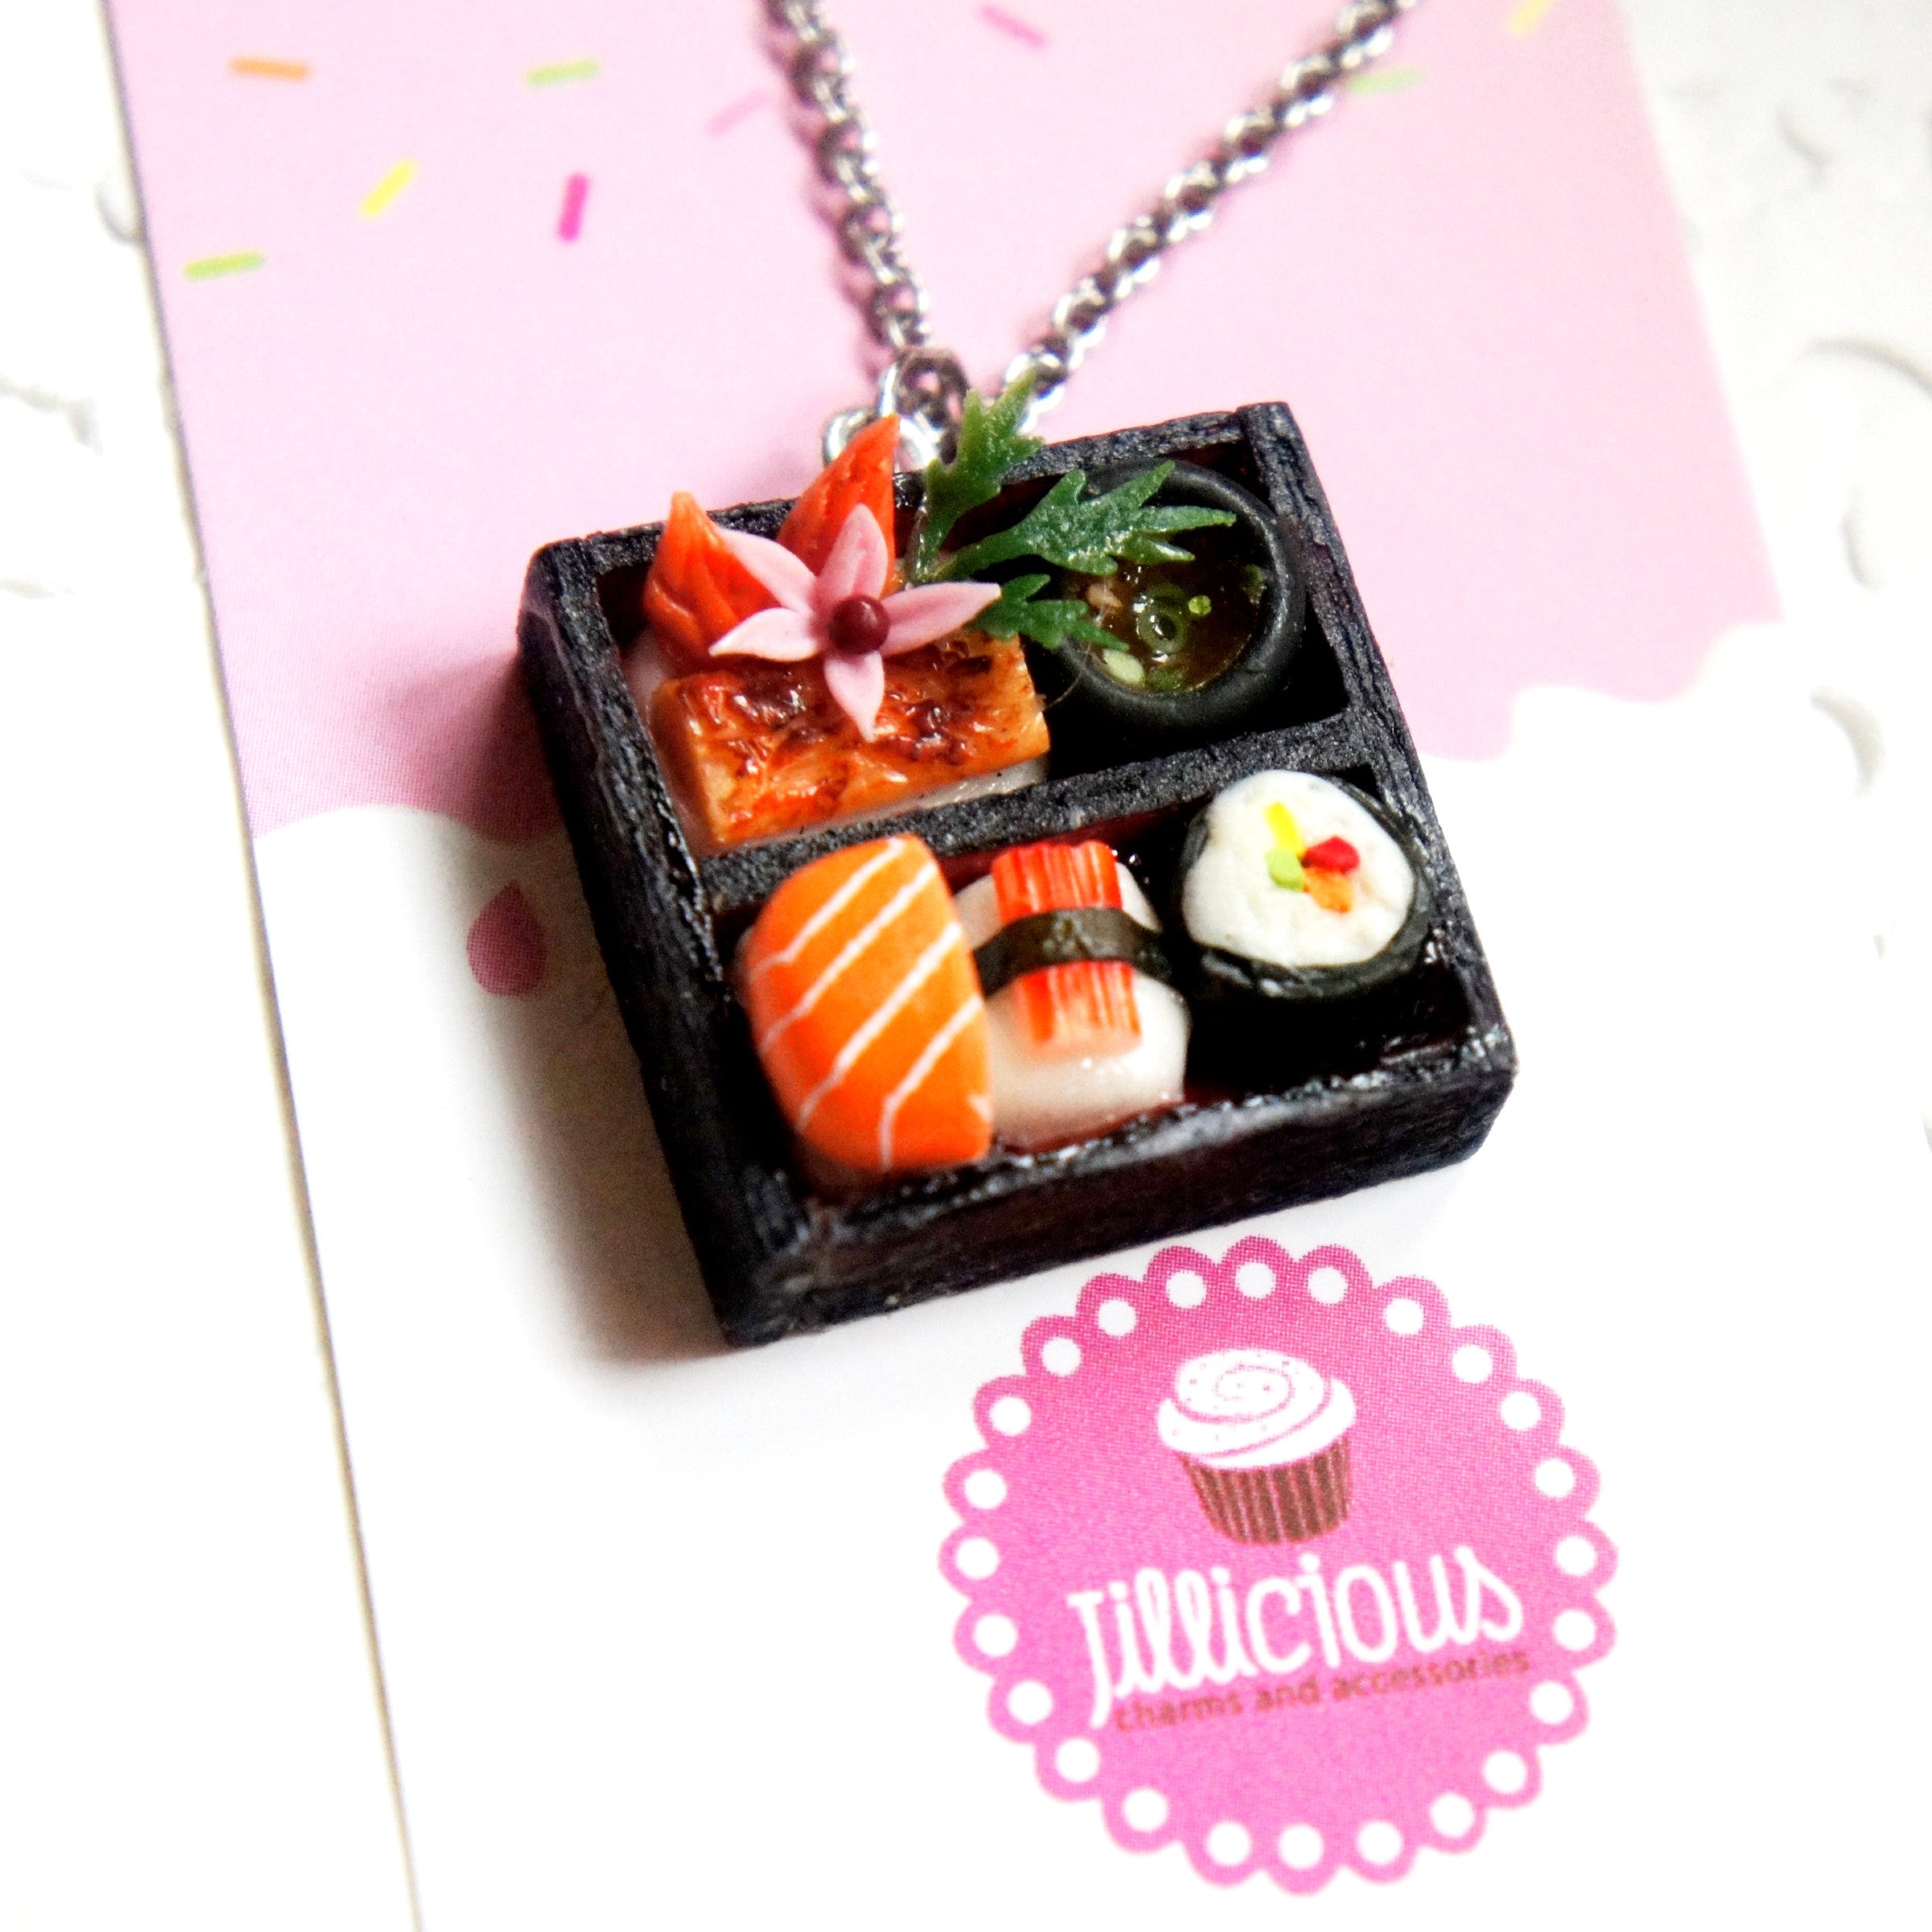 Bento & Sushi Accessories